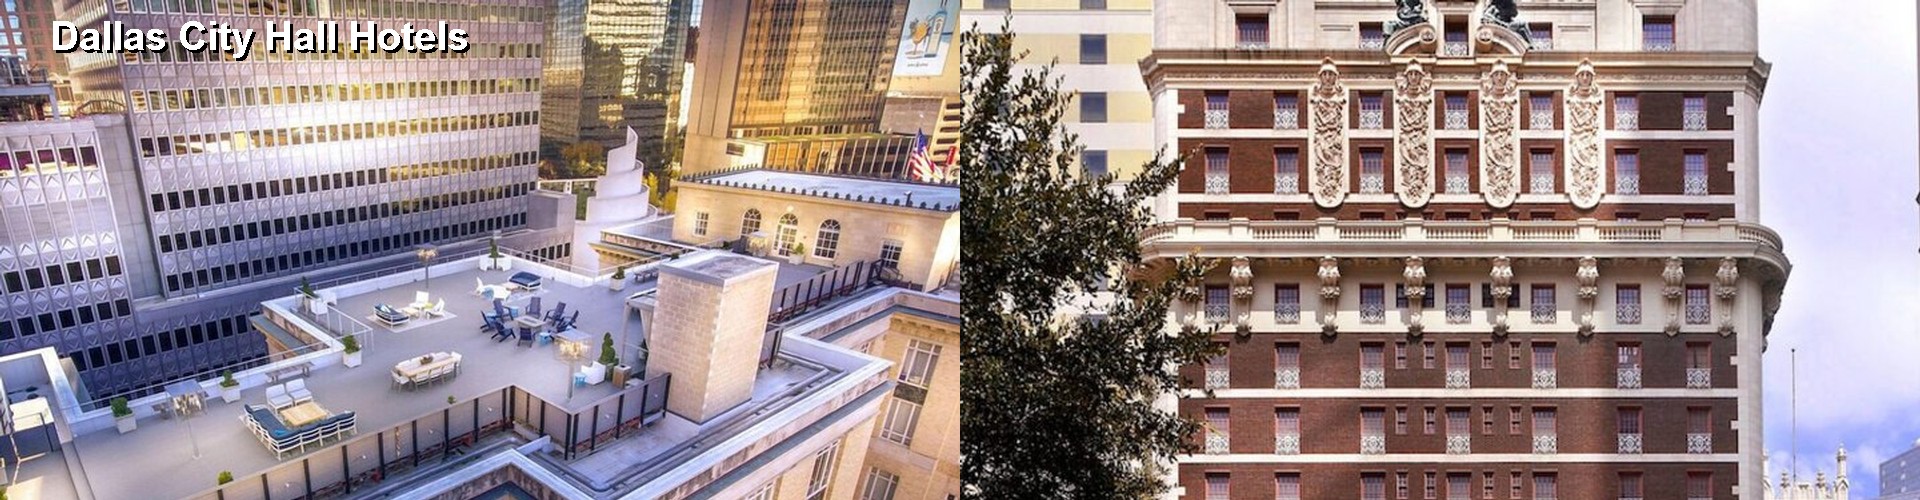 5 Best Hotels near Dallas City Hall